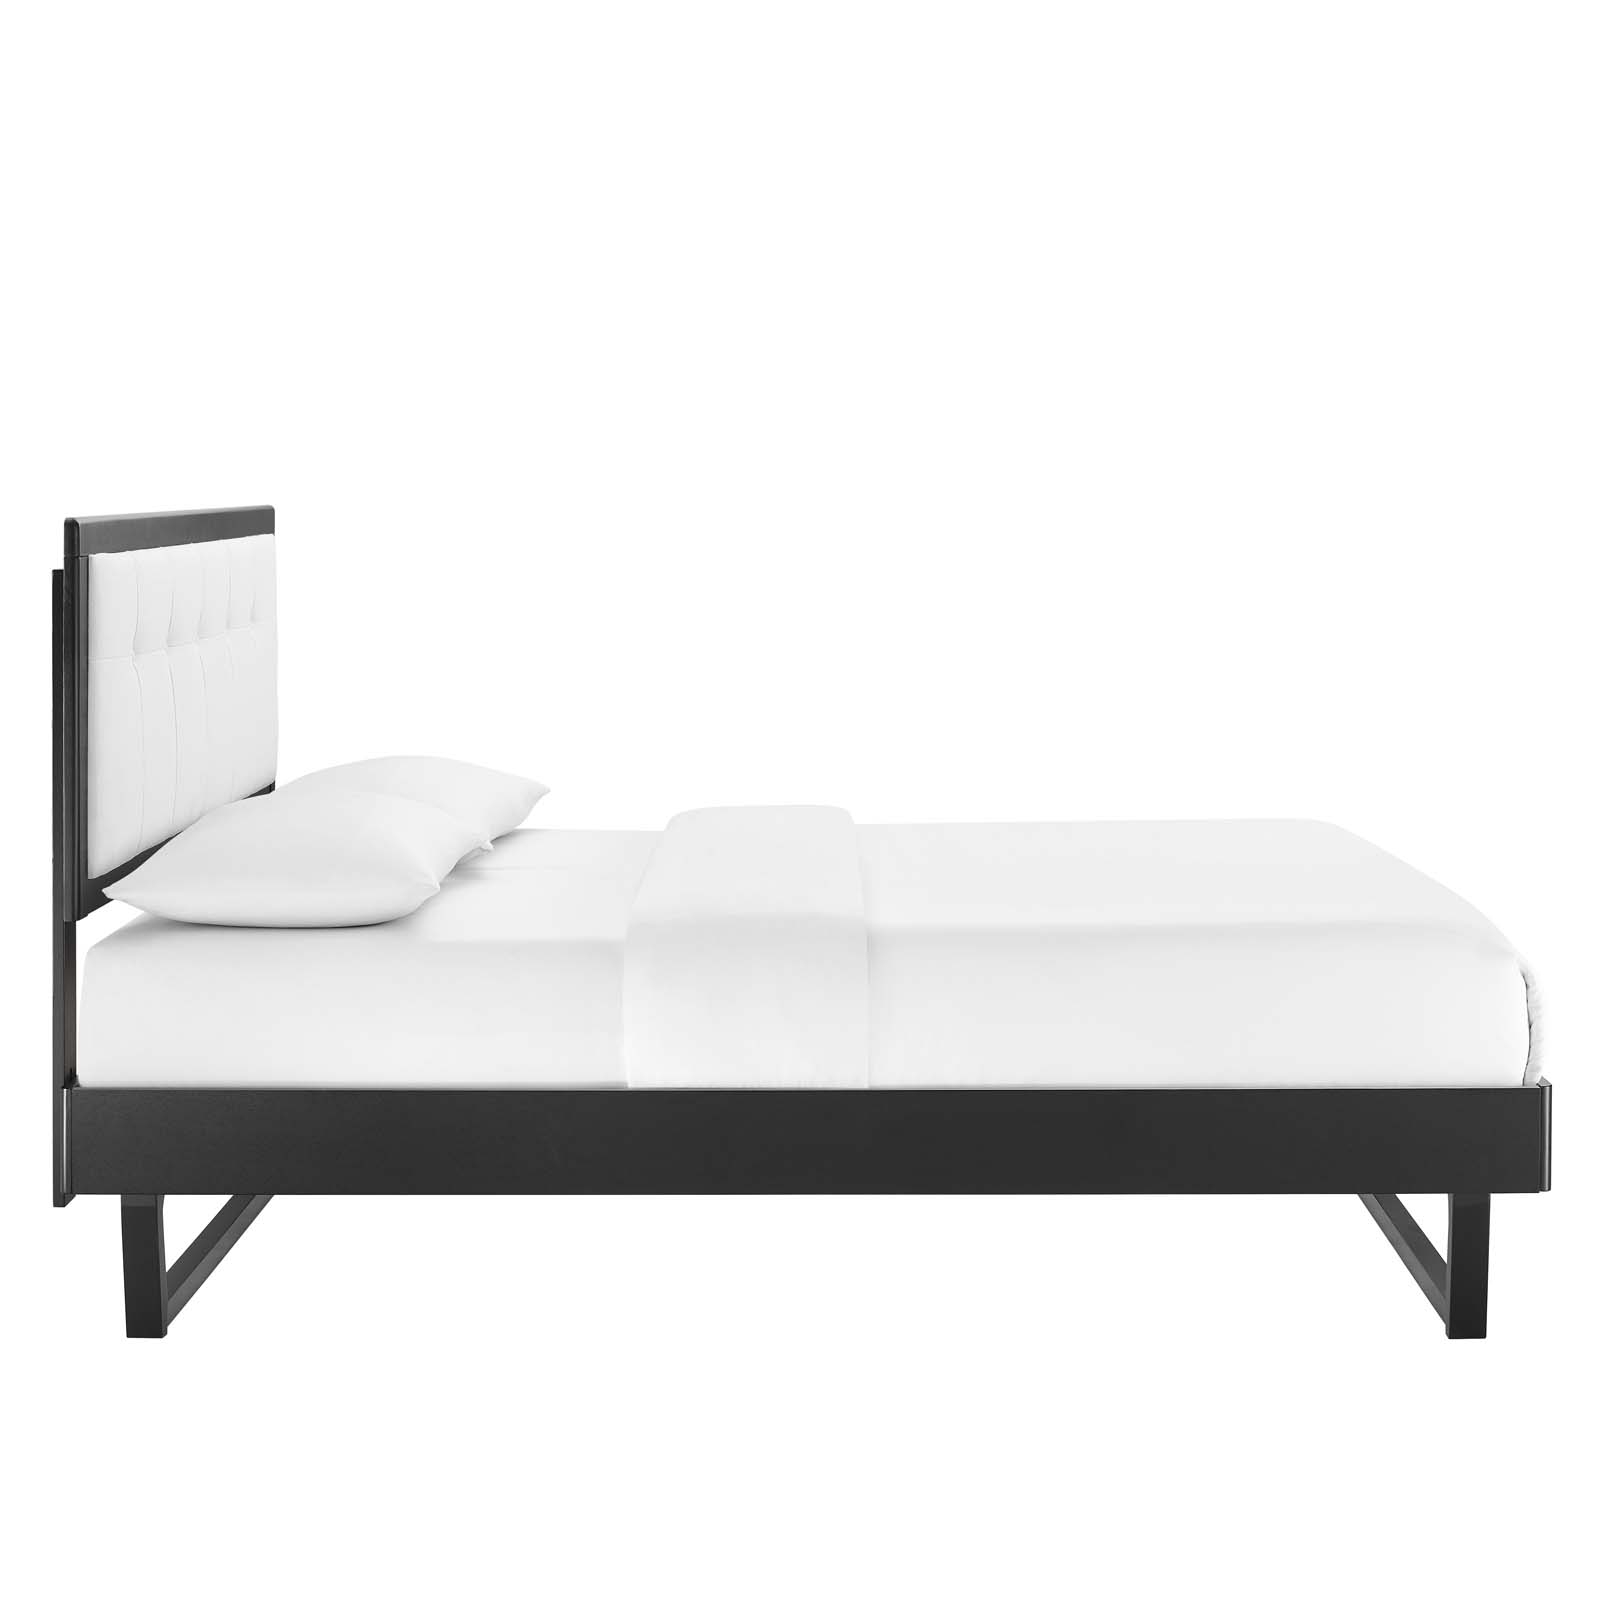 Willow Full Wood Platform Bed With Angular Frame, Black White